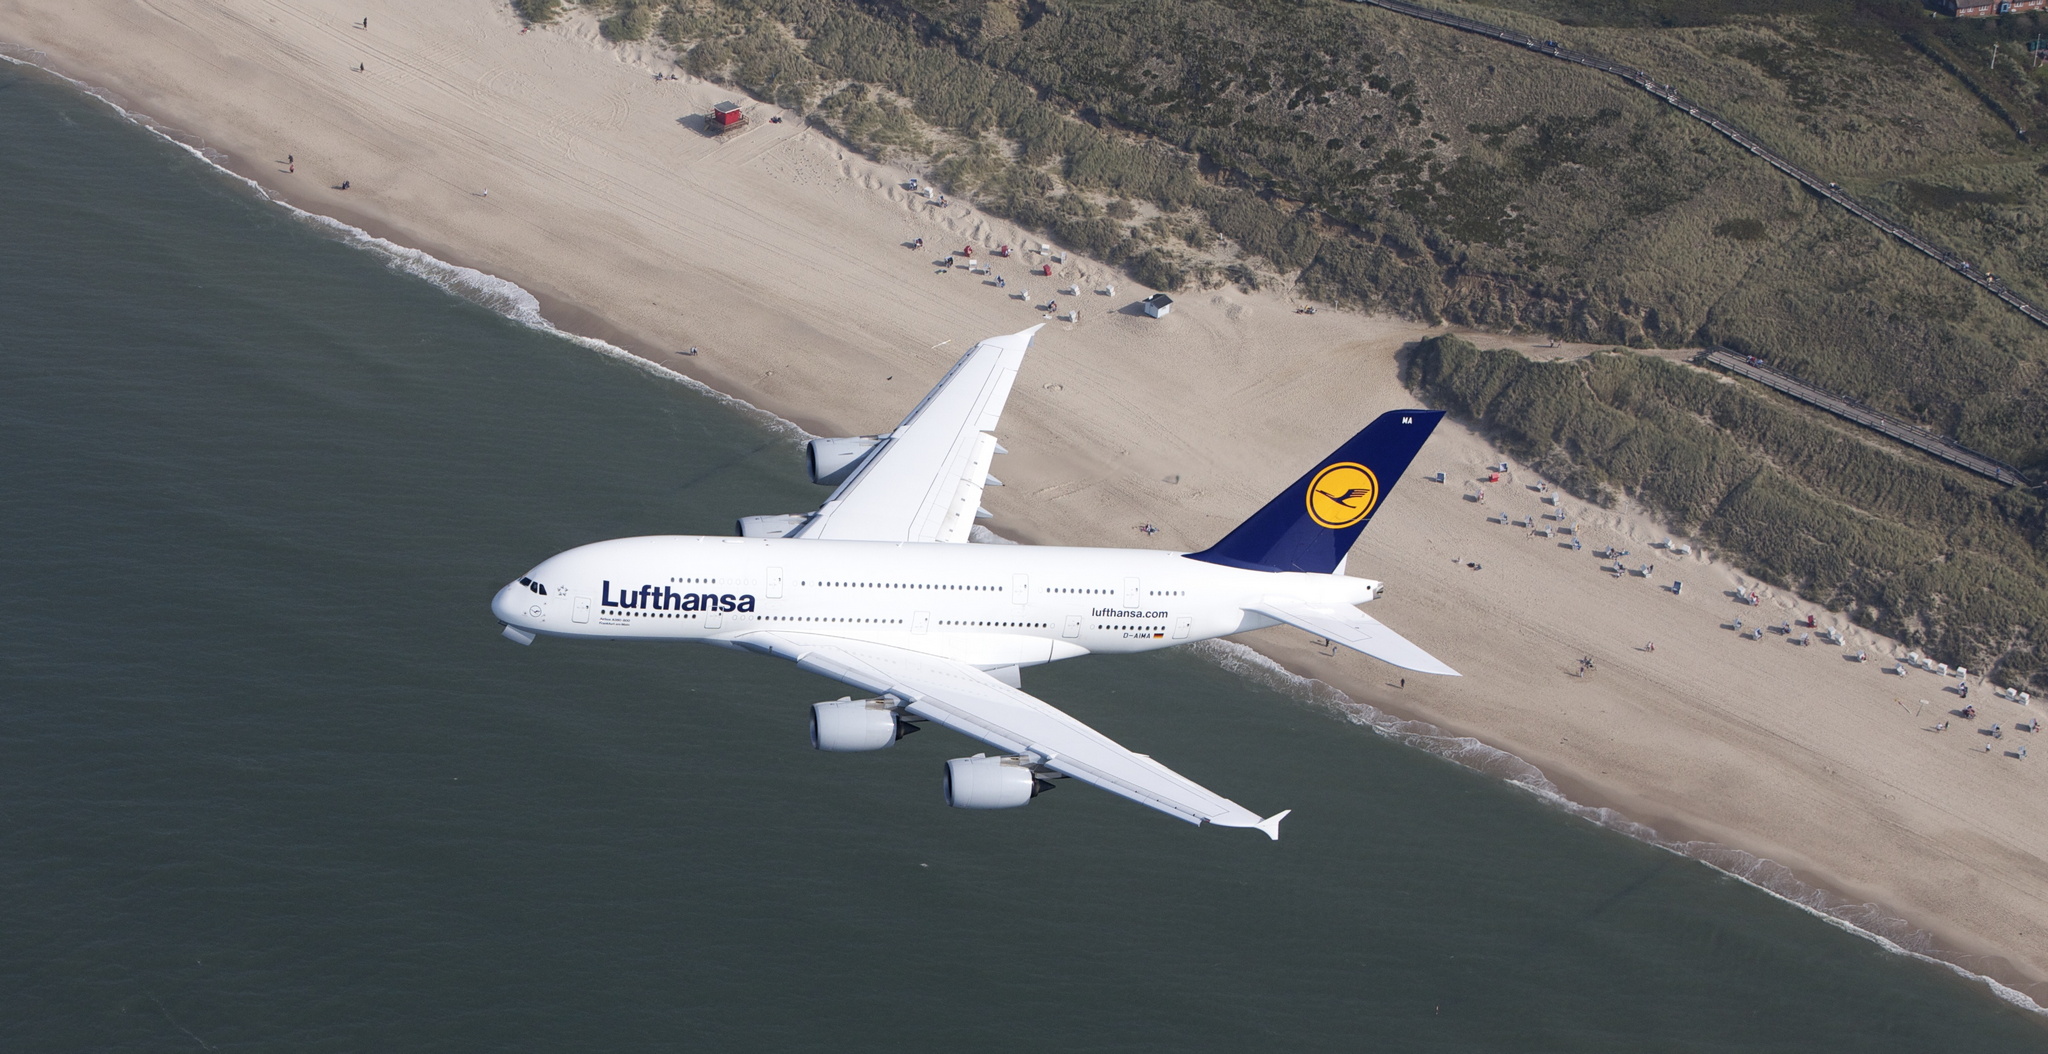 Lufthansa A380 Departing over a beach